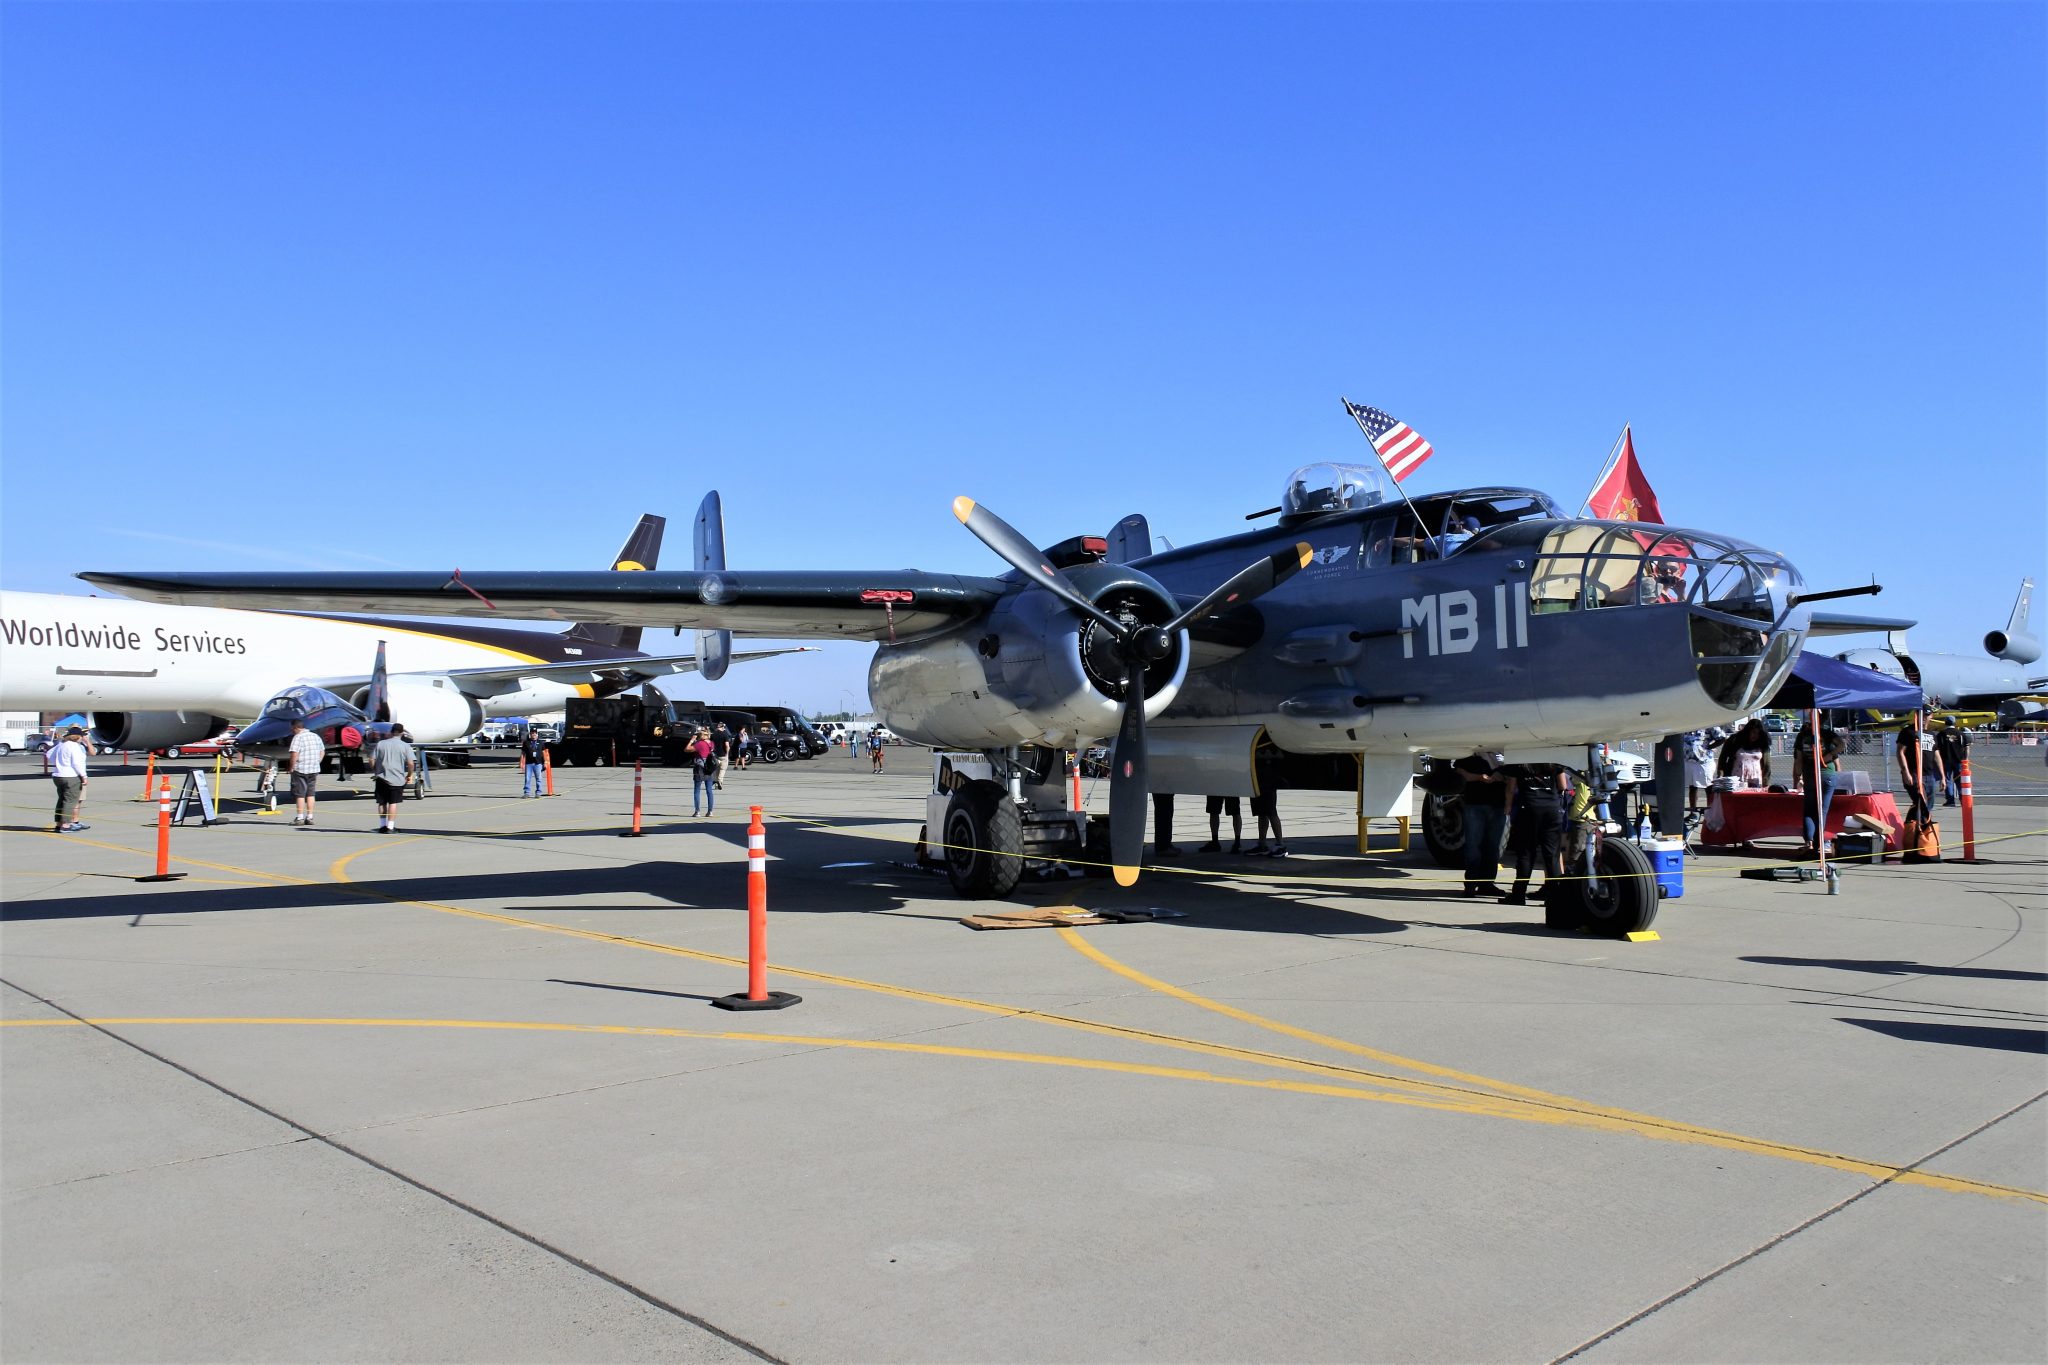 B-25 (PBJ-1J) Mitchel